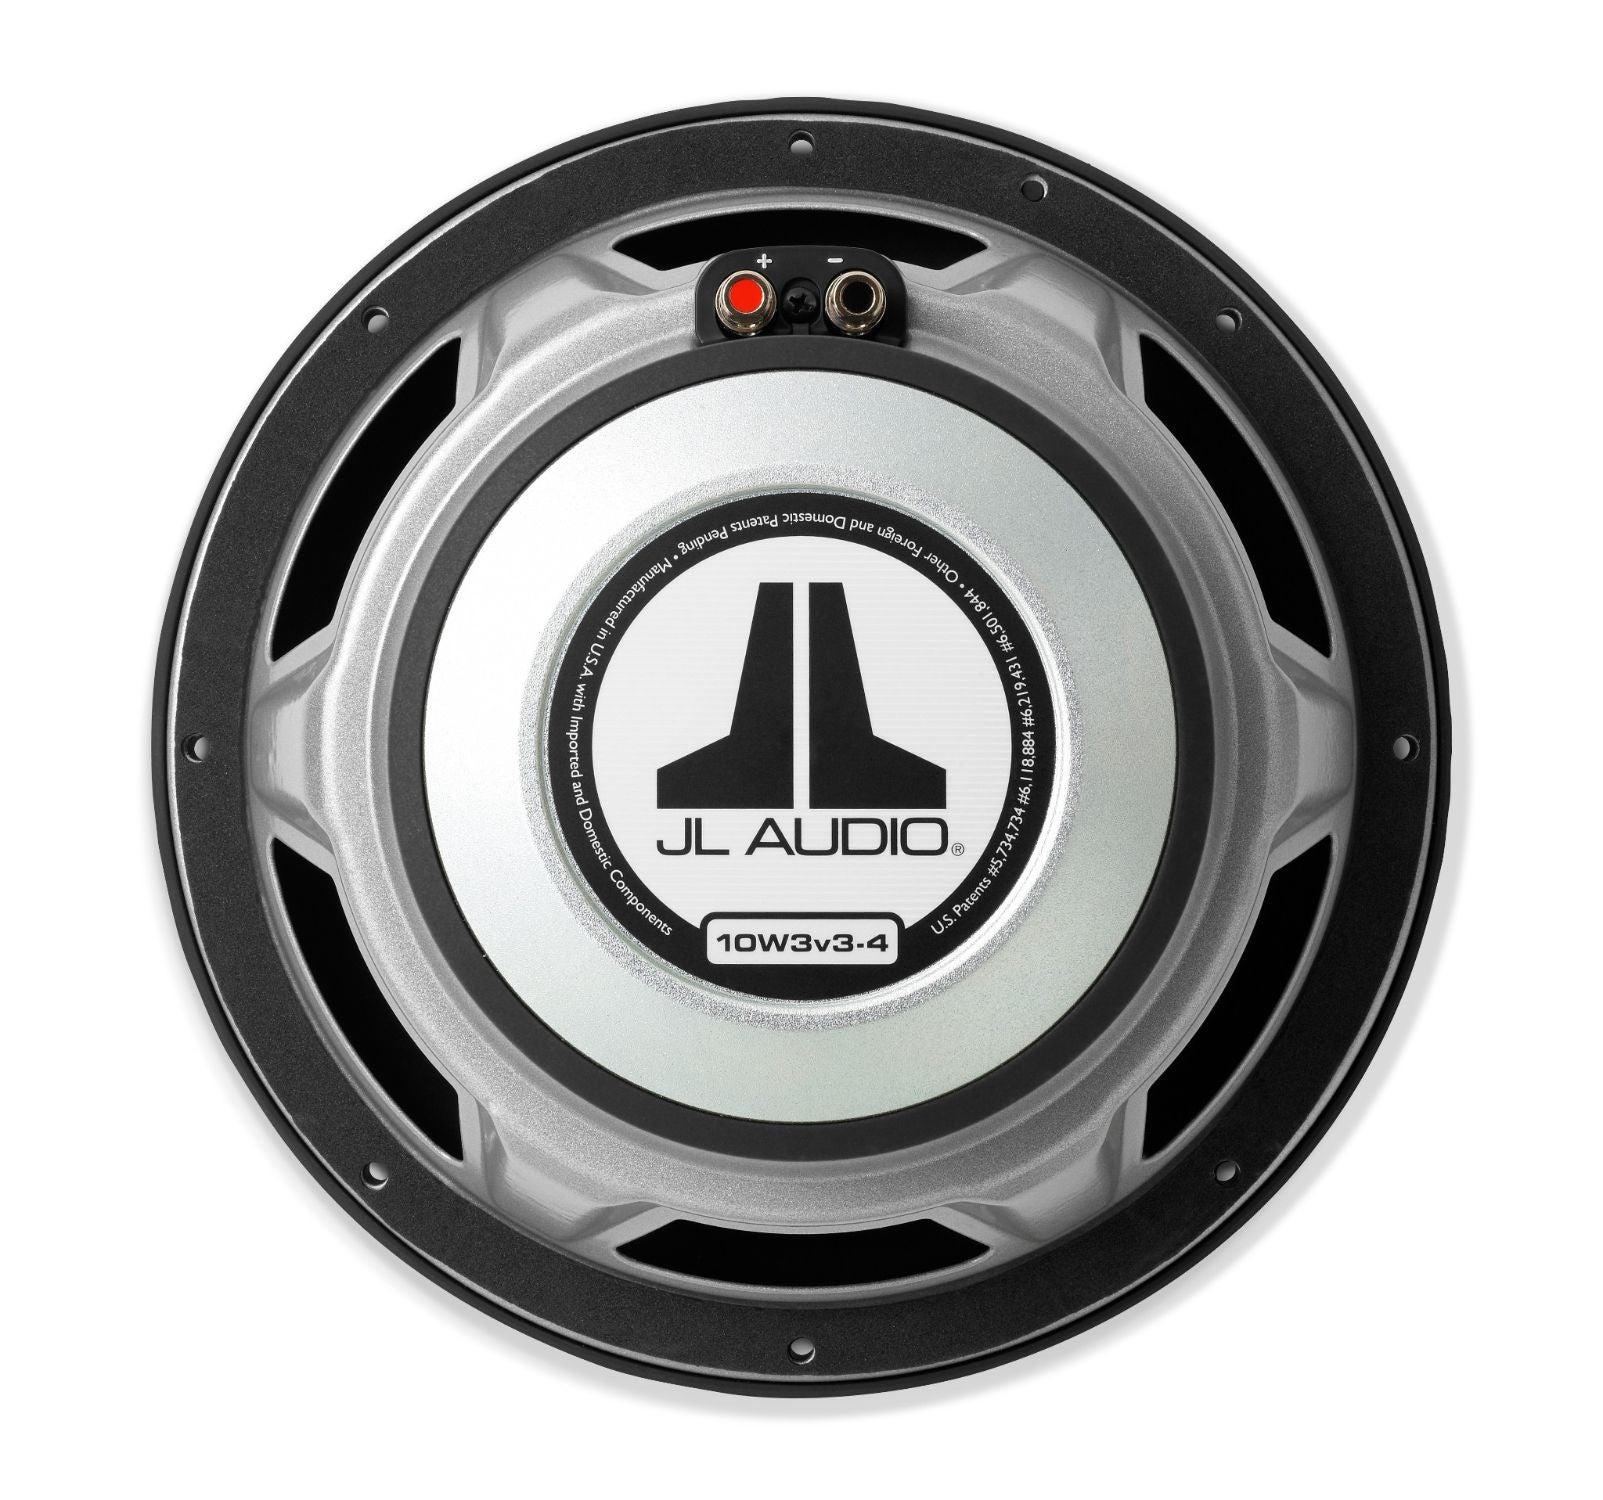 JL Audio 10W3v3-2 10-inch Subwoofer Driver (500W, 2 ohm) (10W3v32)